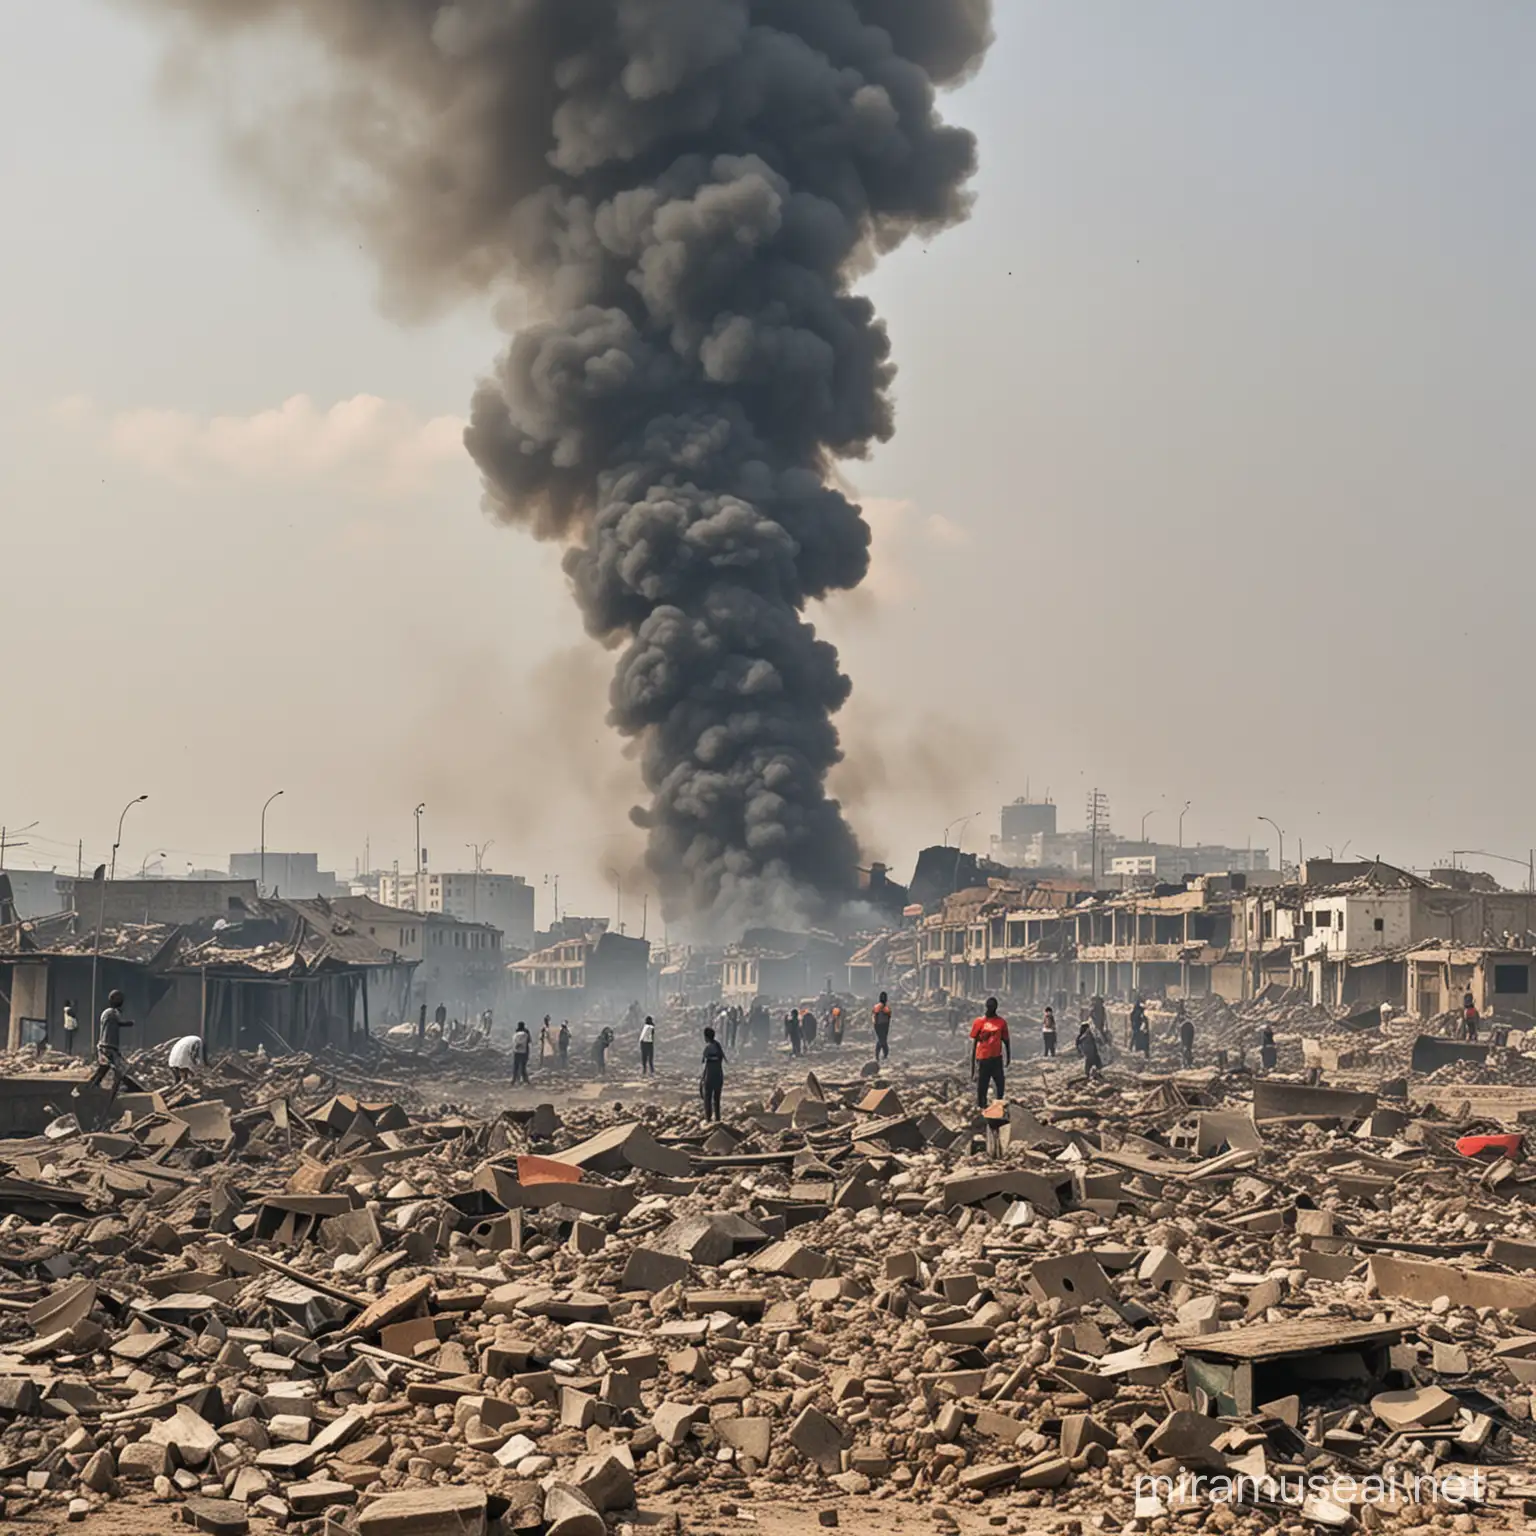 Devastated Cityscape Lagos Nigeria in Ruins and Smoke